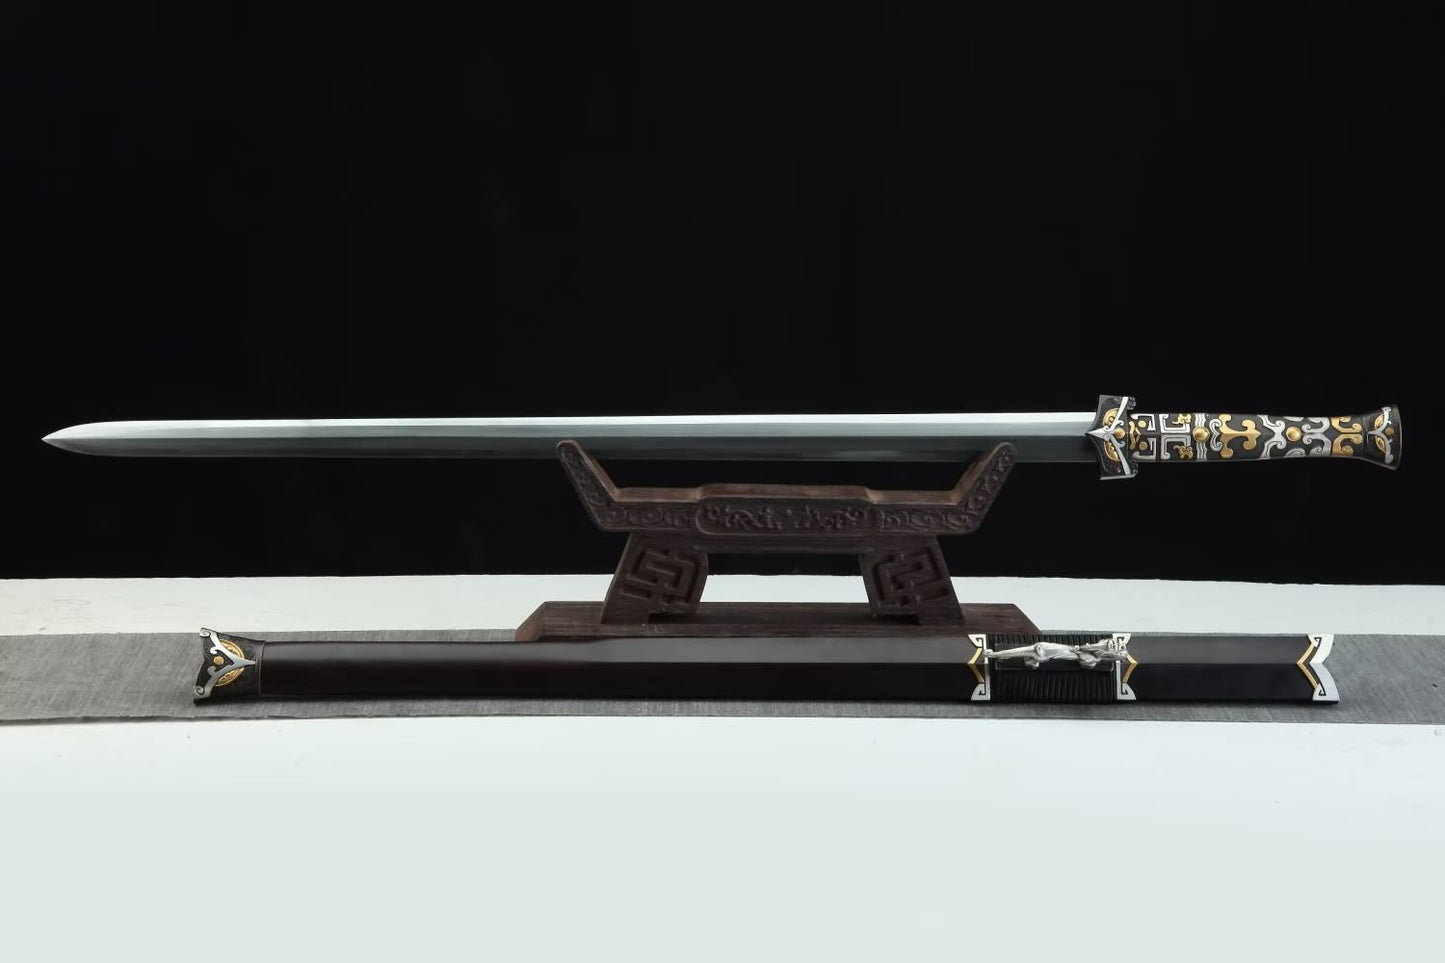 Han Swords Real,Forged 1095 Folded Steel Blade,Copper Fittings,Ebony Scabbard